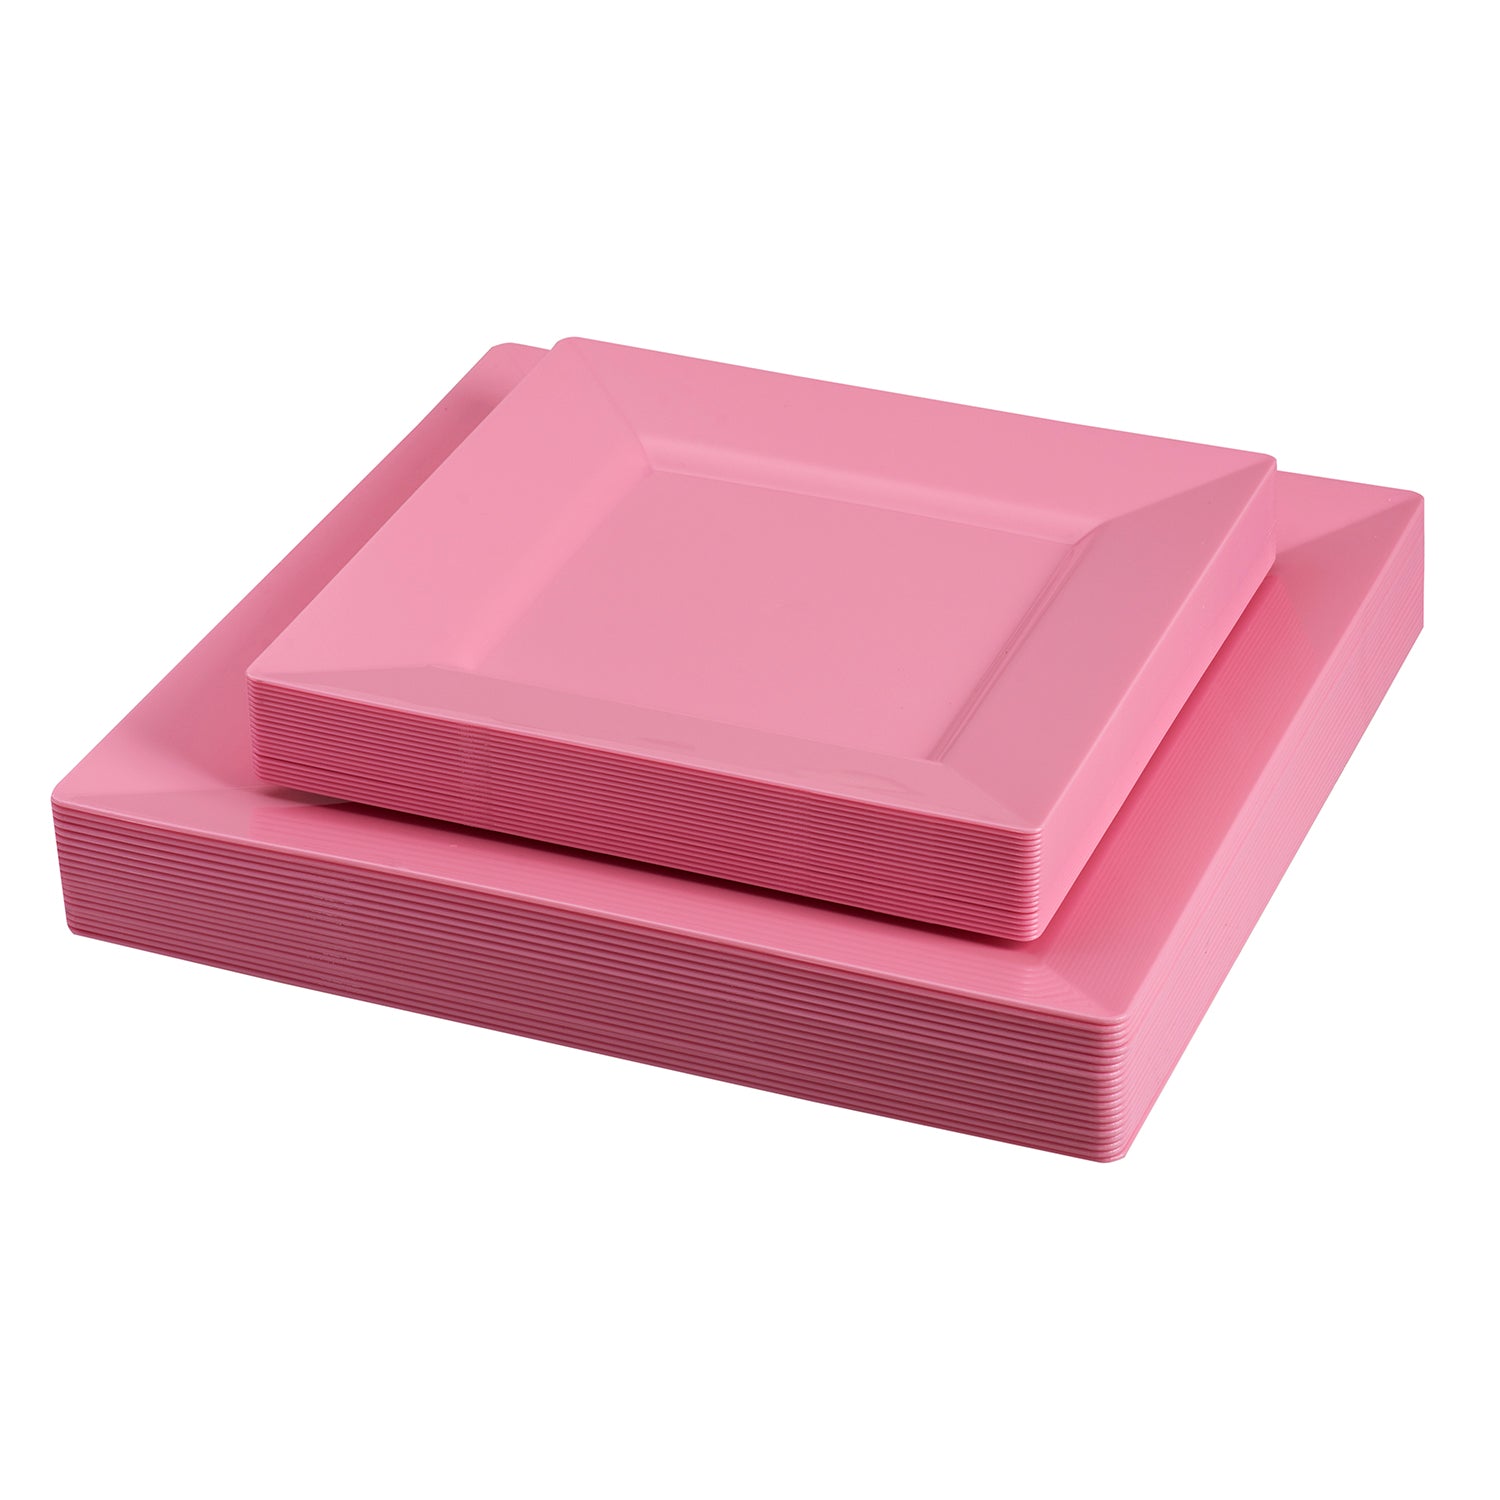 Pink plastic plates